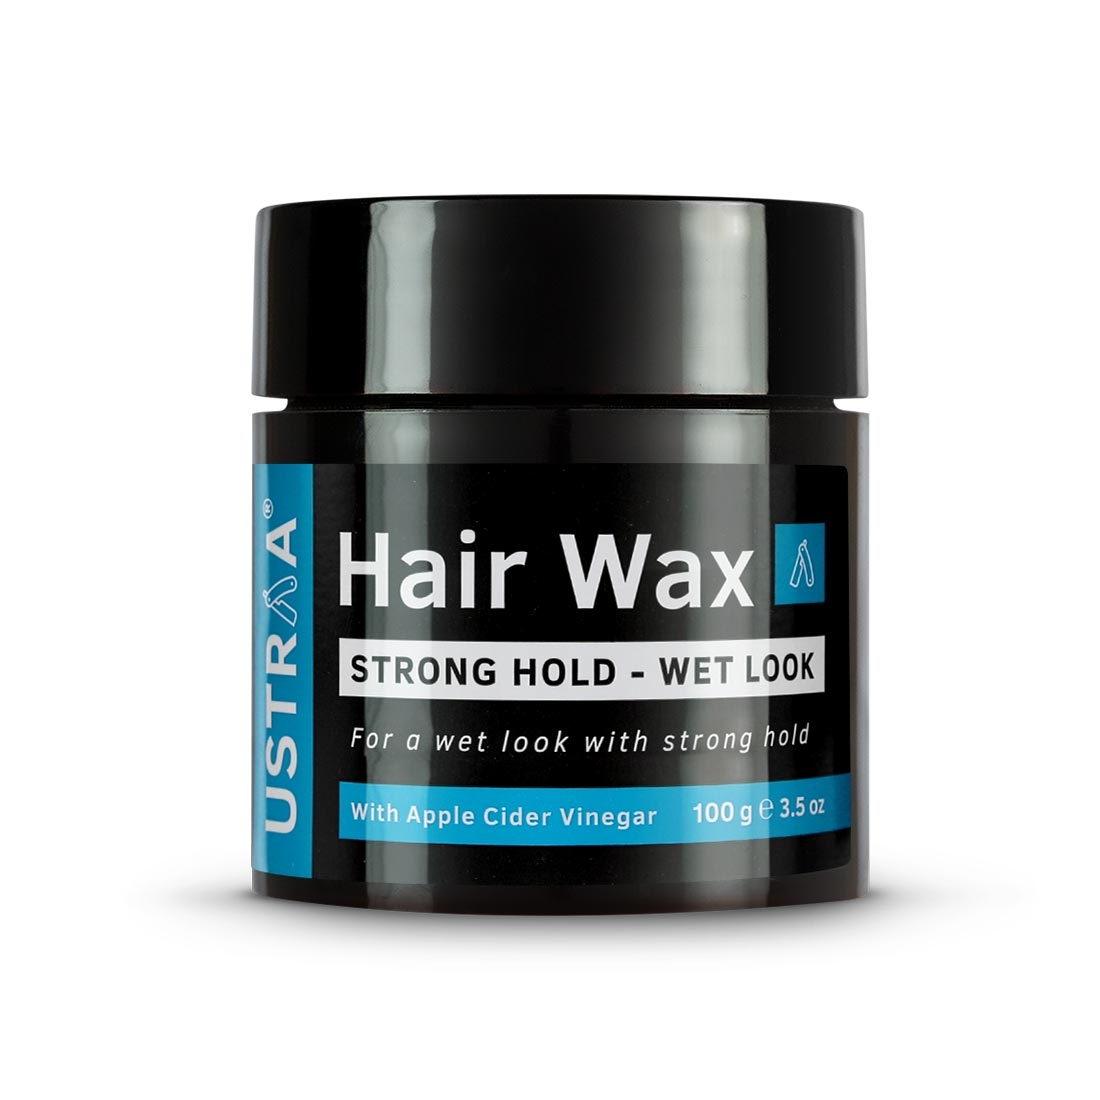 Ustraa | Hair Wax - Strong Hold - Wet Look 100g 0